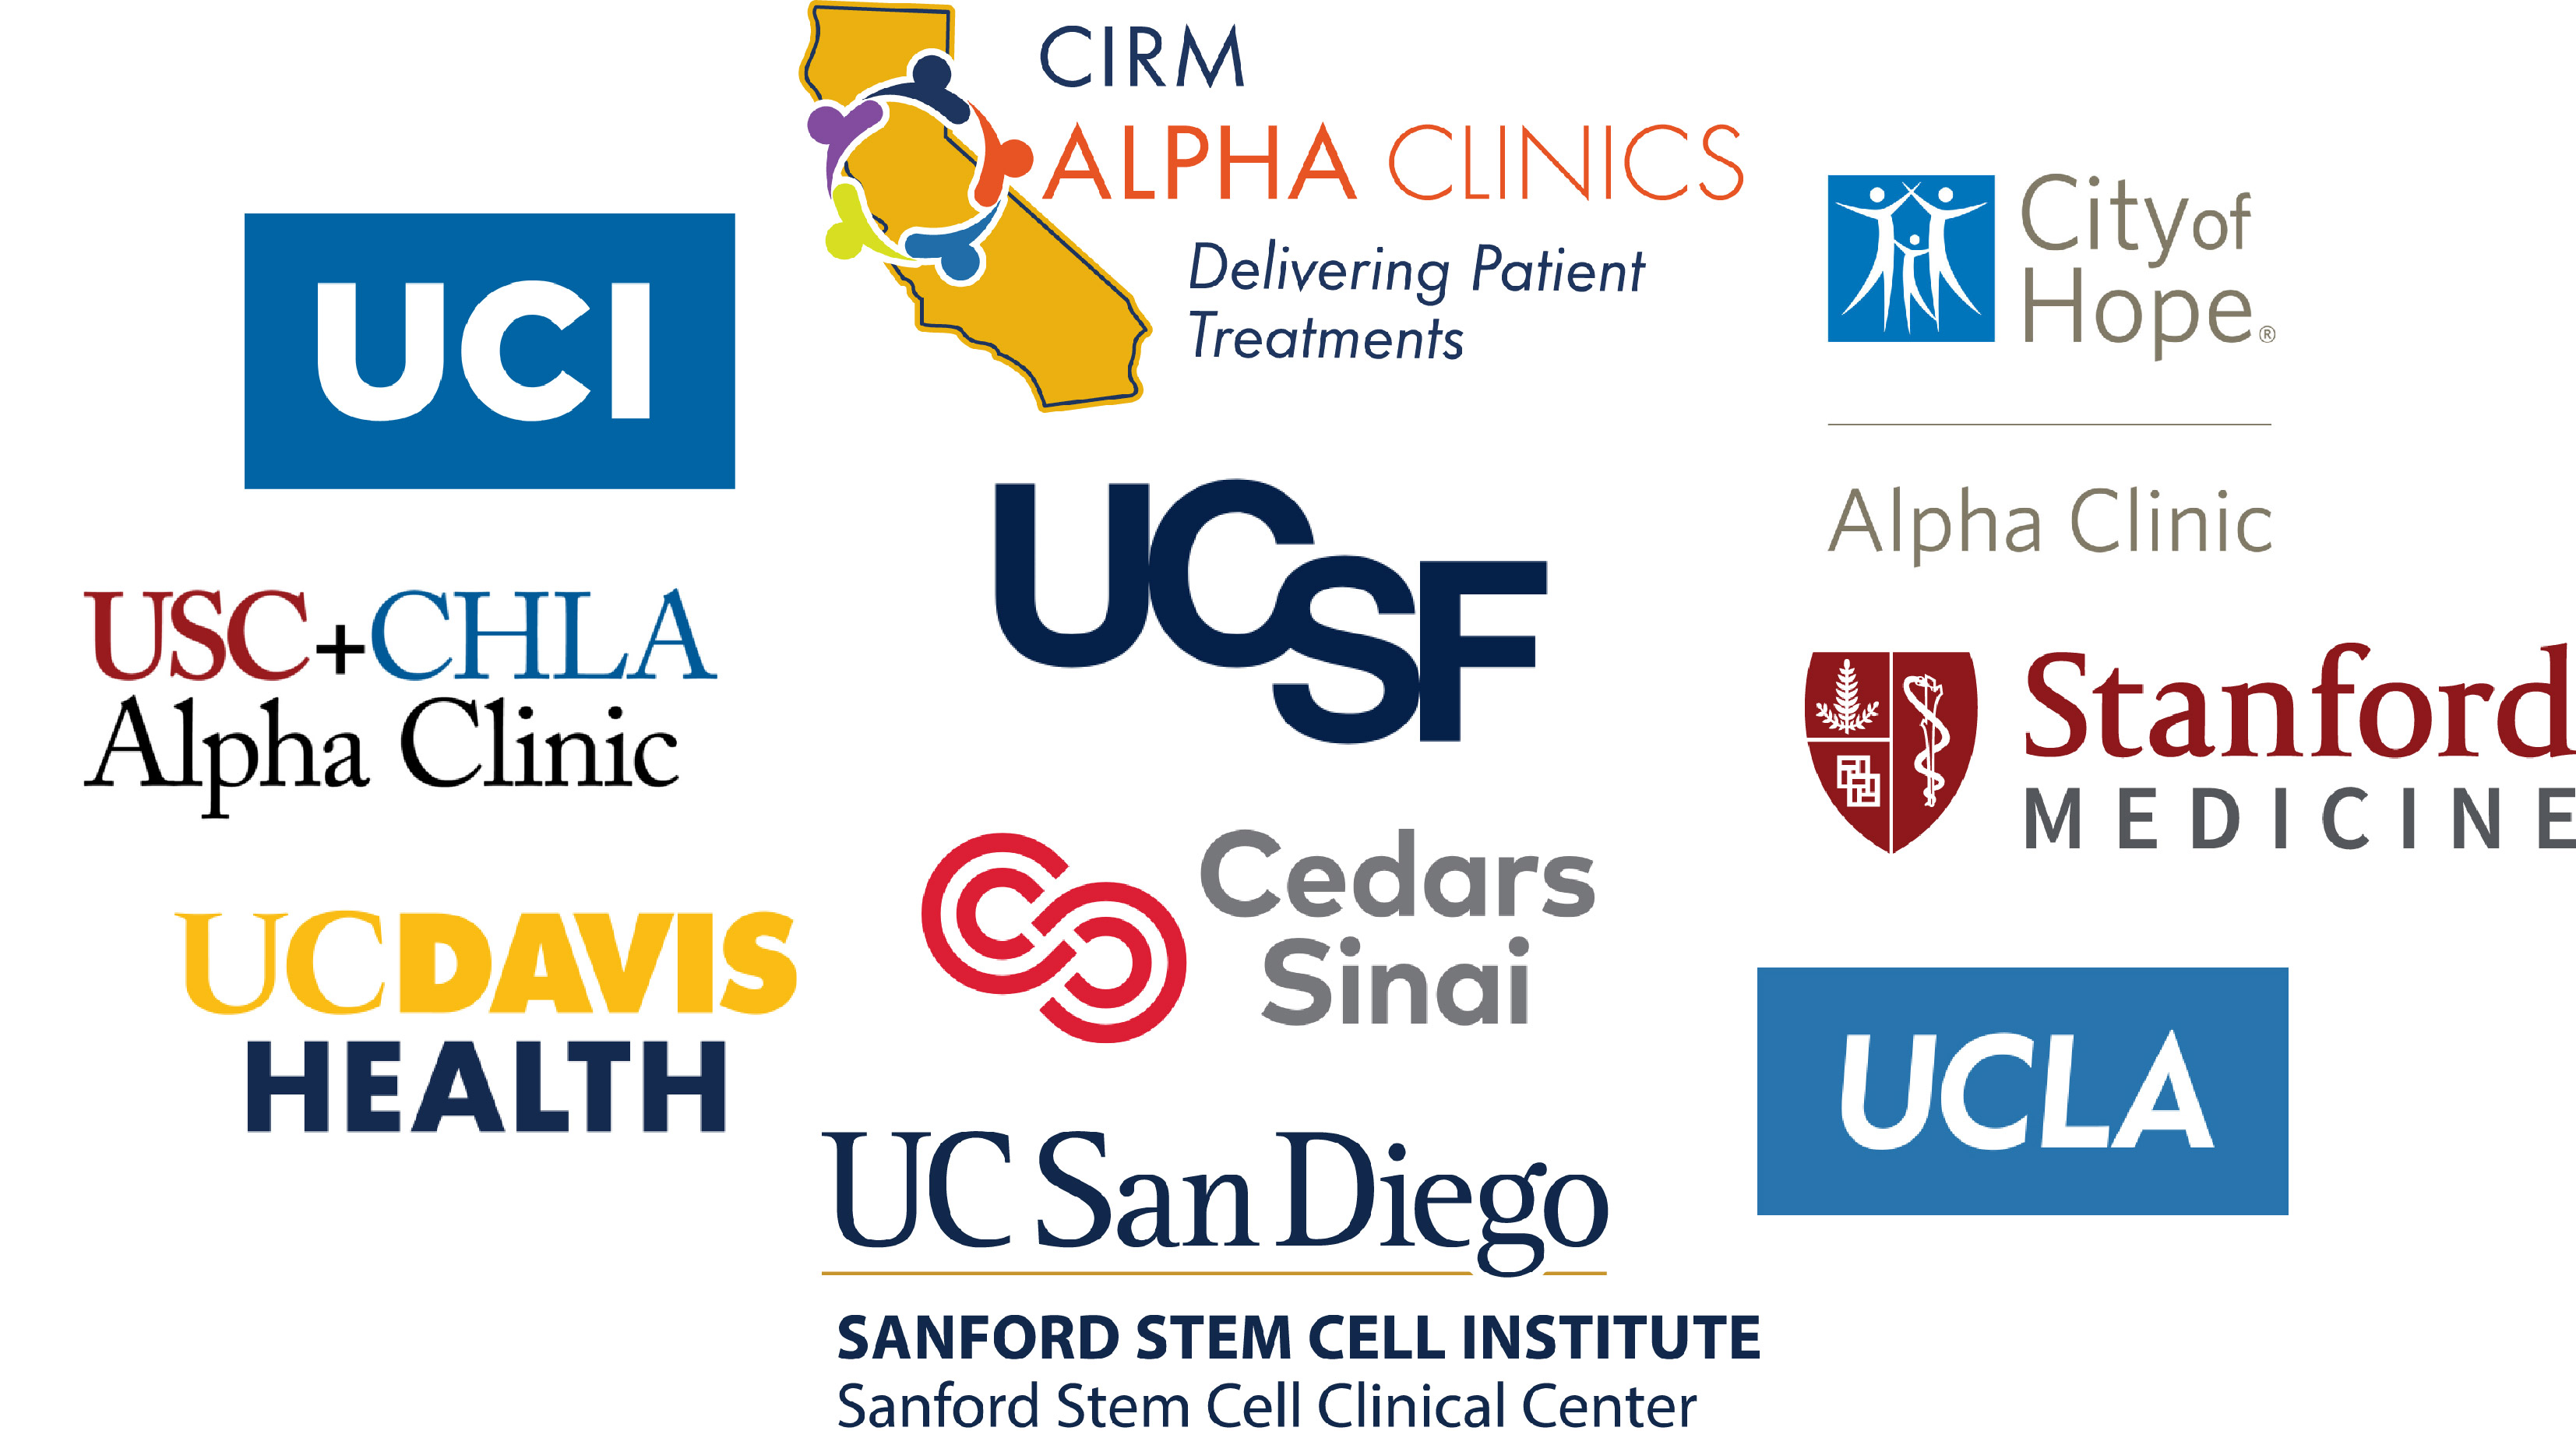 CIRM-Alpha-Clinics-UCSD-Sanford-Stem-Cell-Institute.jpg